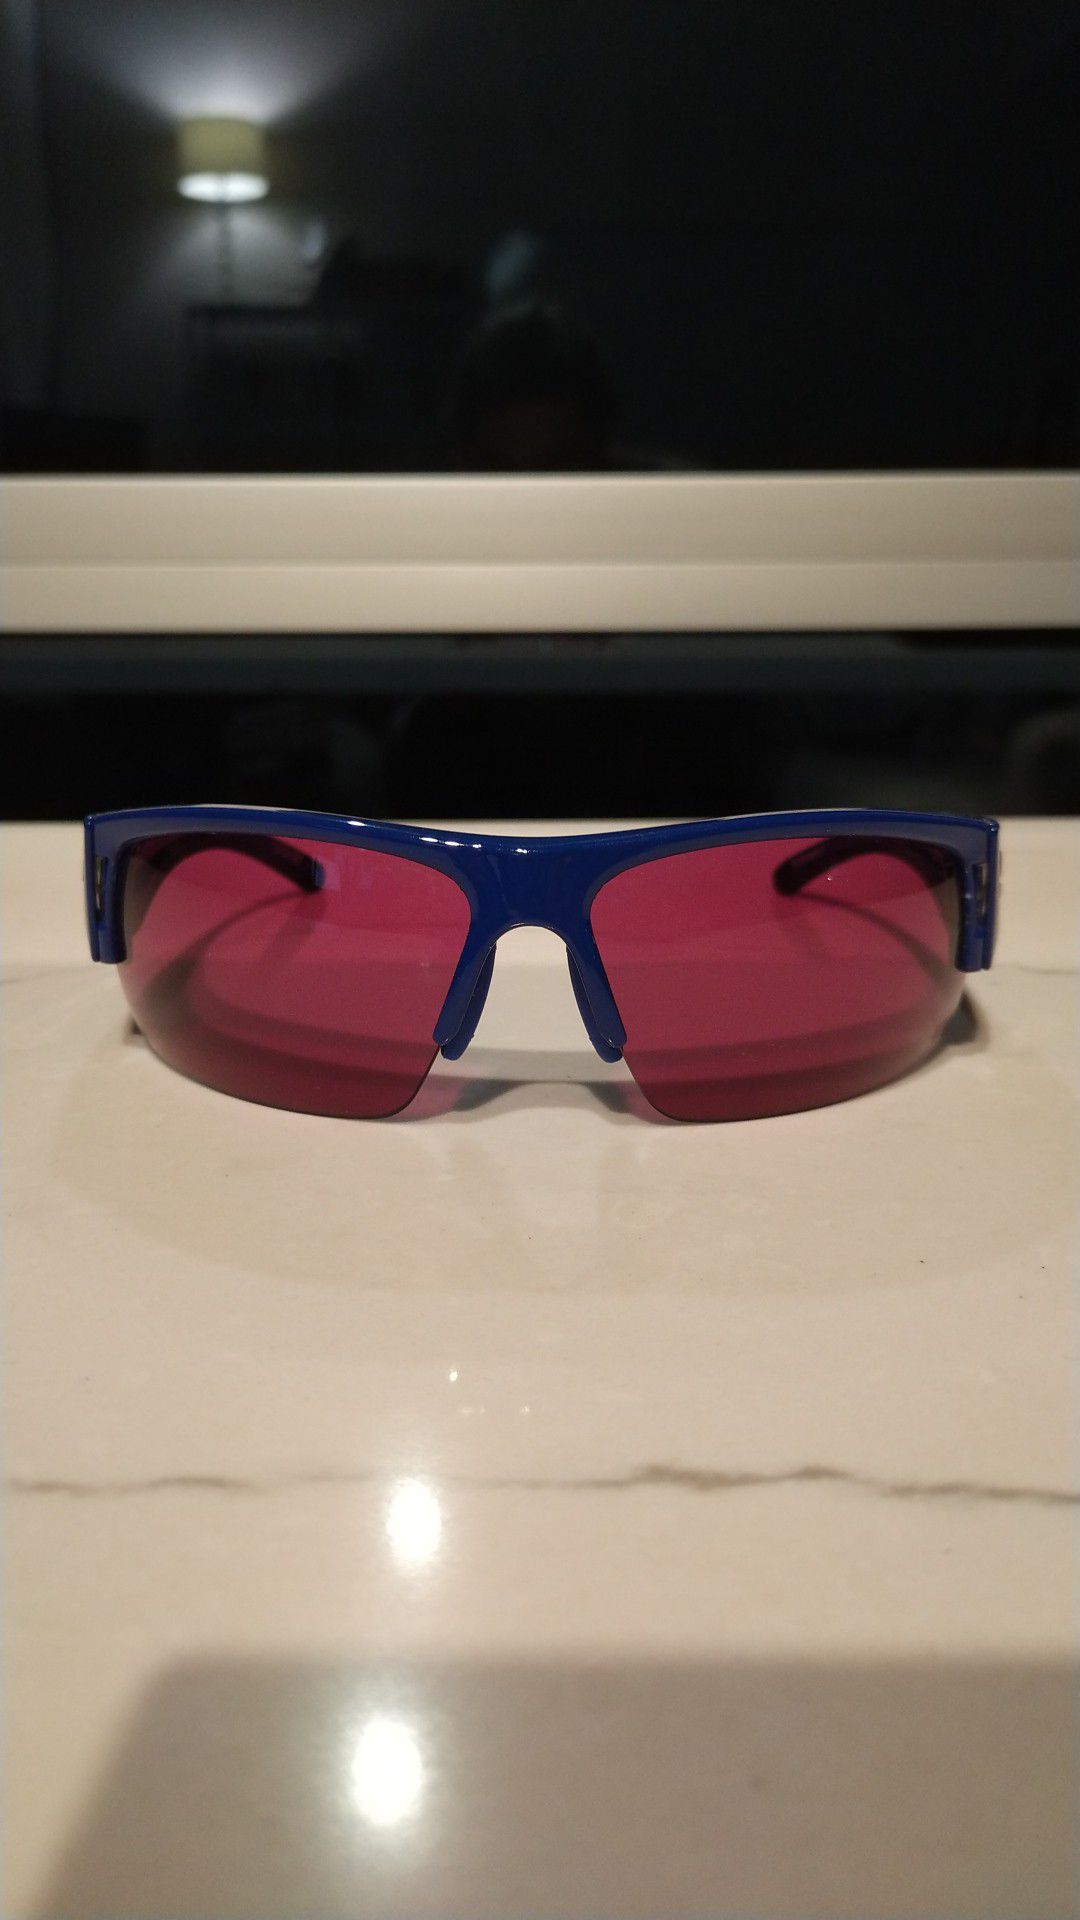 $124 on Amazon. New Spy Optic Flyer Sunglasses